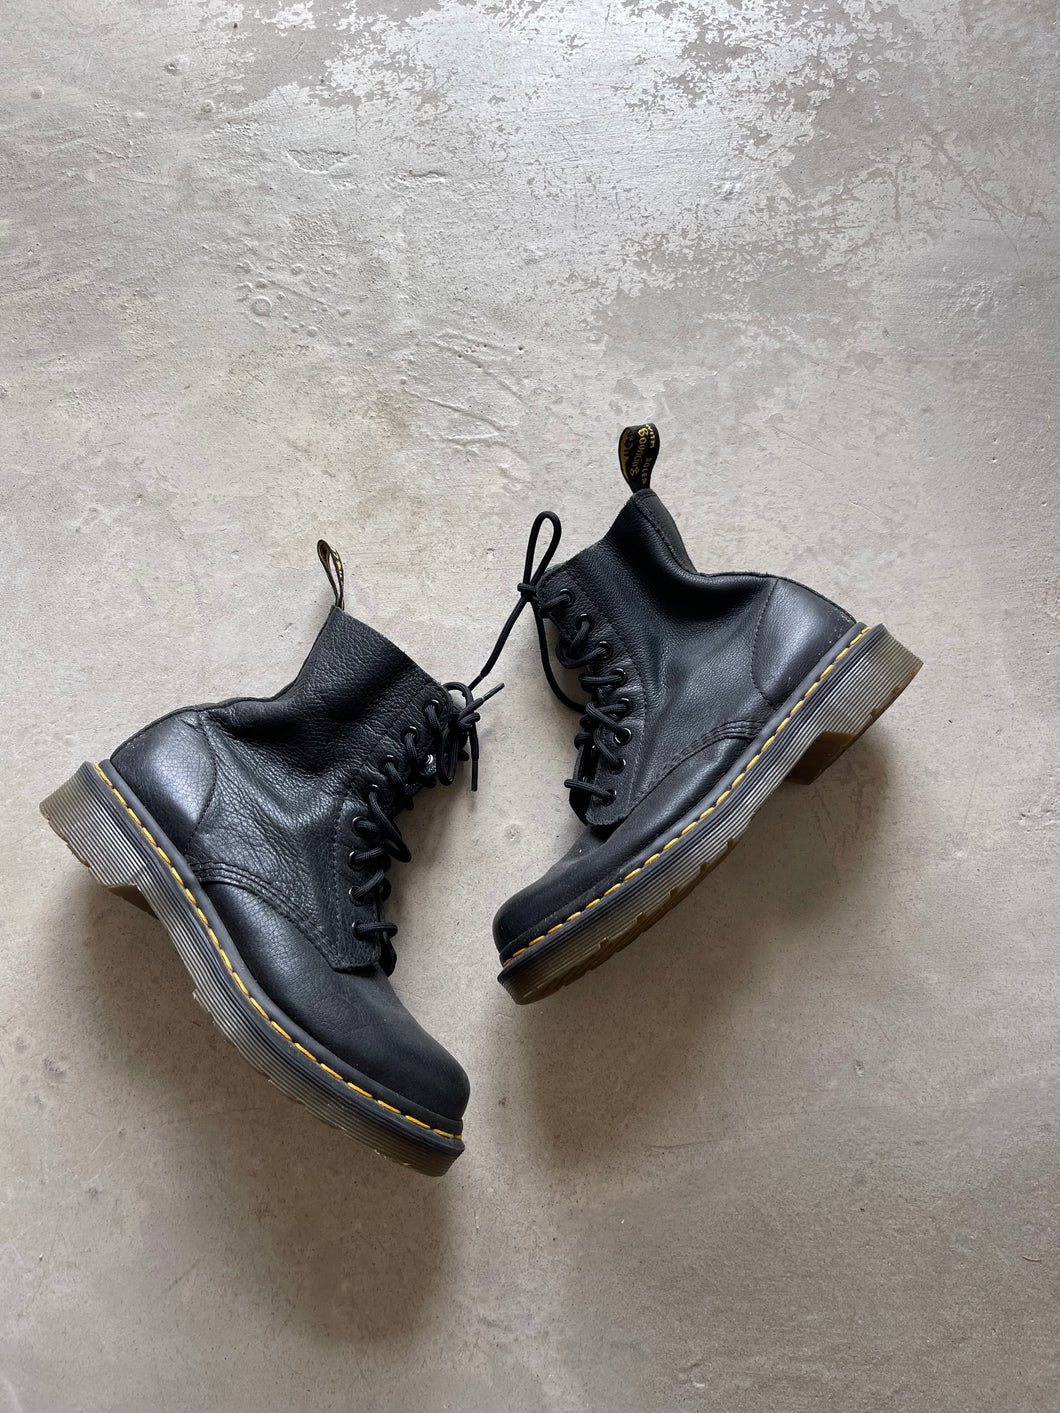 Dr Marten Leather Boots - UK 4